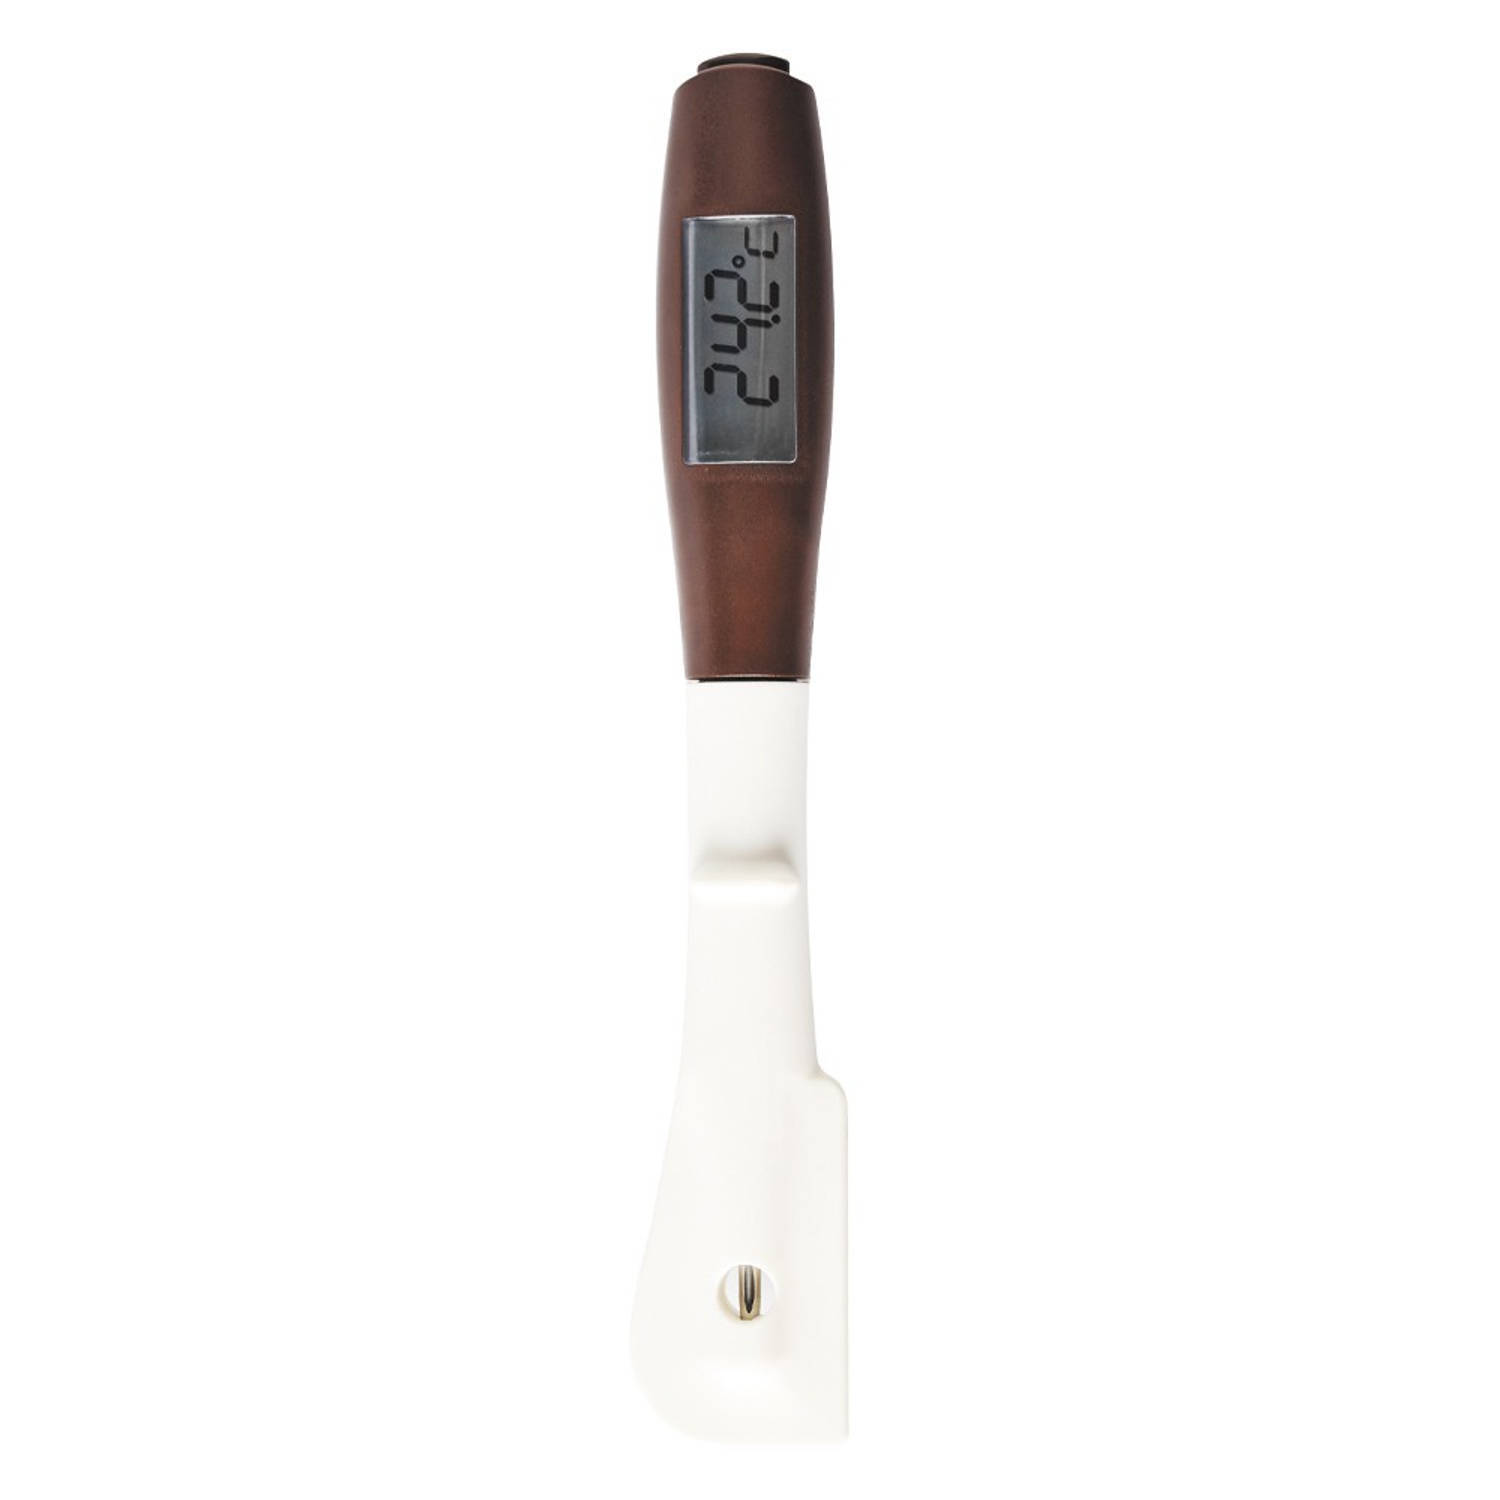 Mastrad m°chocolate 2-in-1 keukenthermometer spatel / spits - dessertthermometer met afneembare en flexibele siliconen punt - nauwkeurig meetbaar temperatuurbereik van -50 tot 250 °C